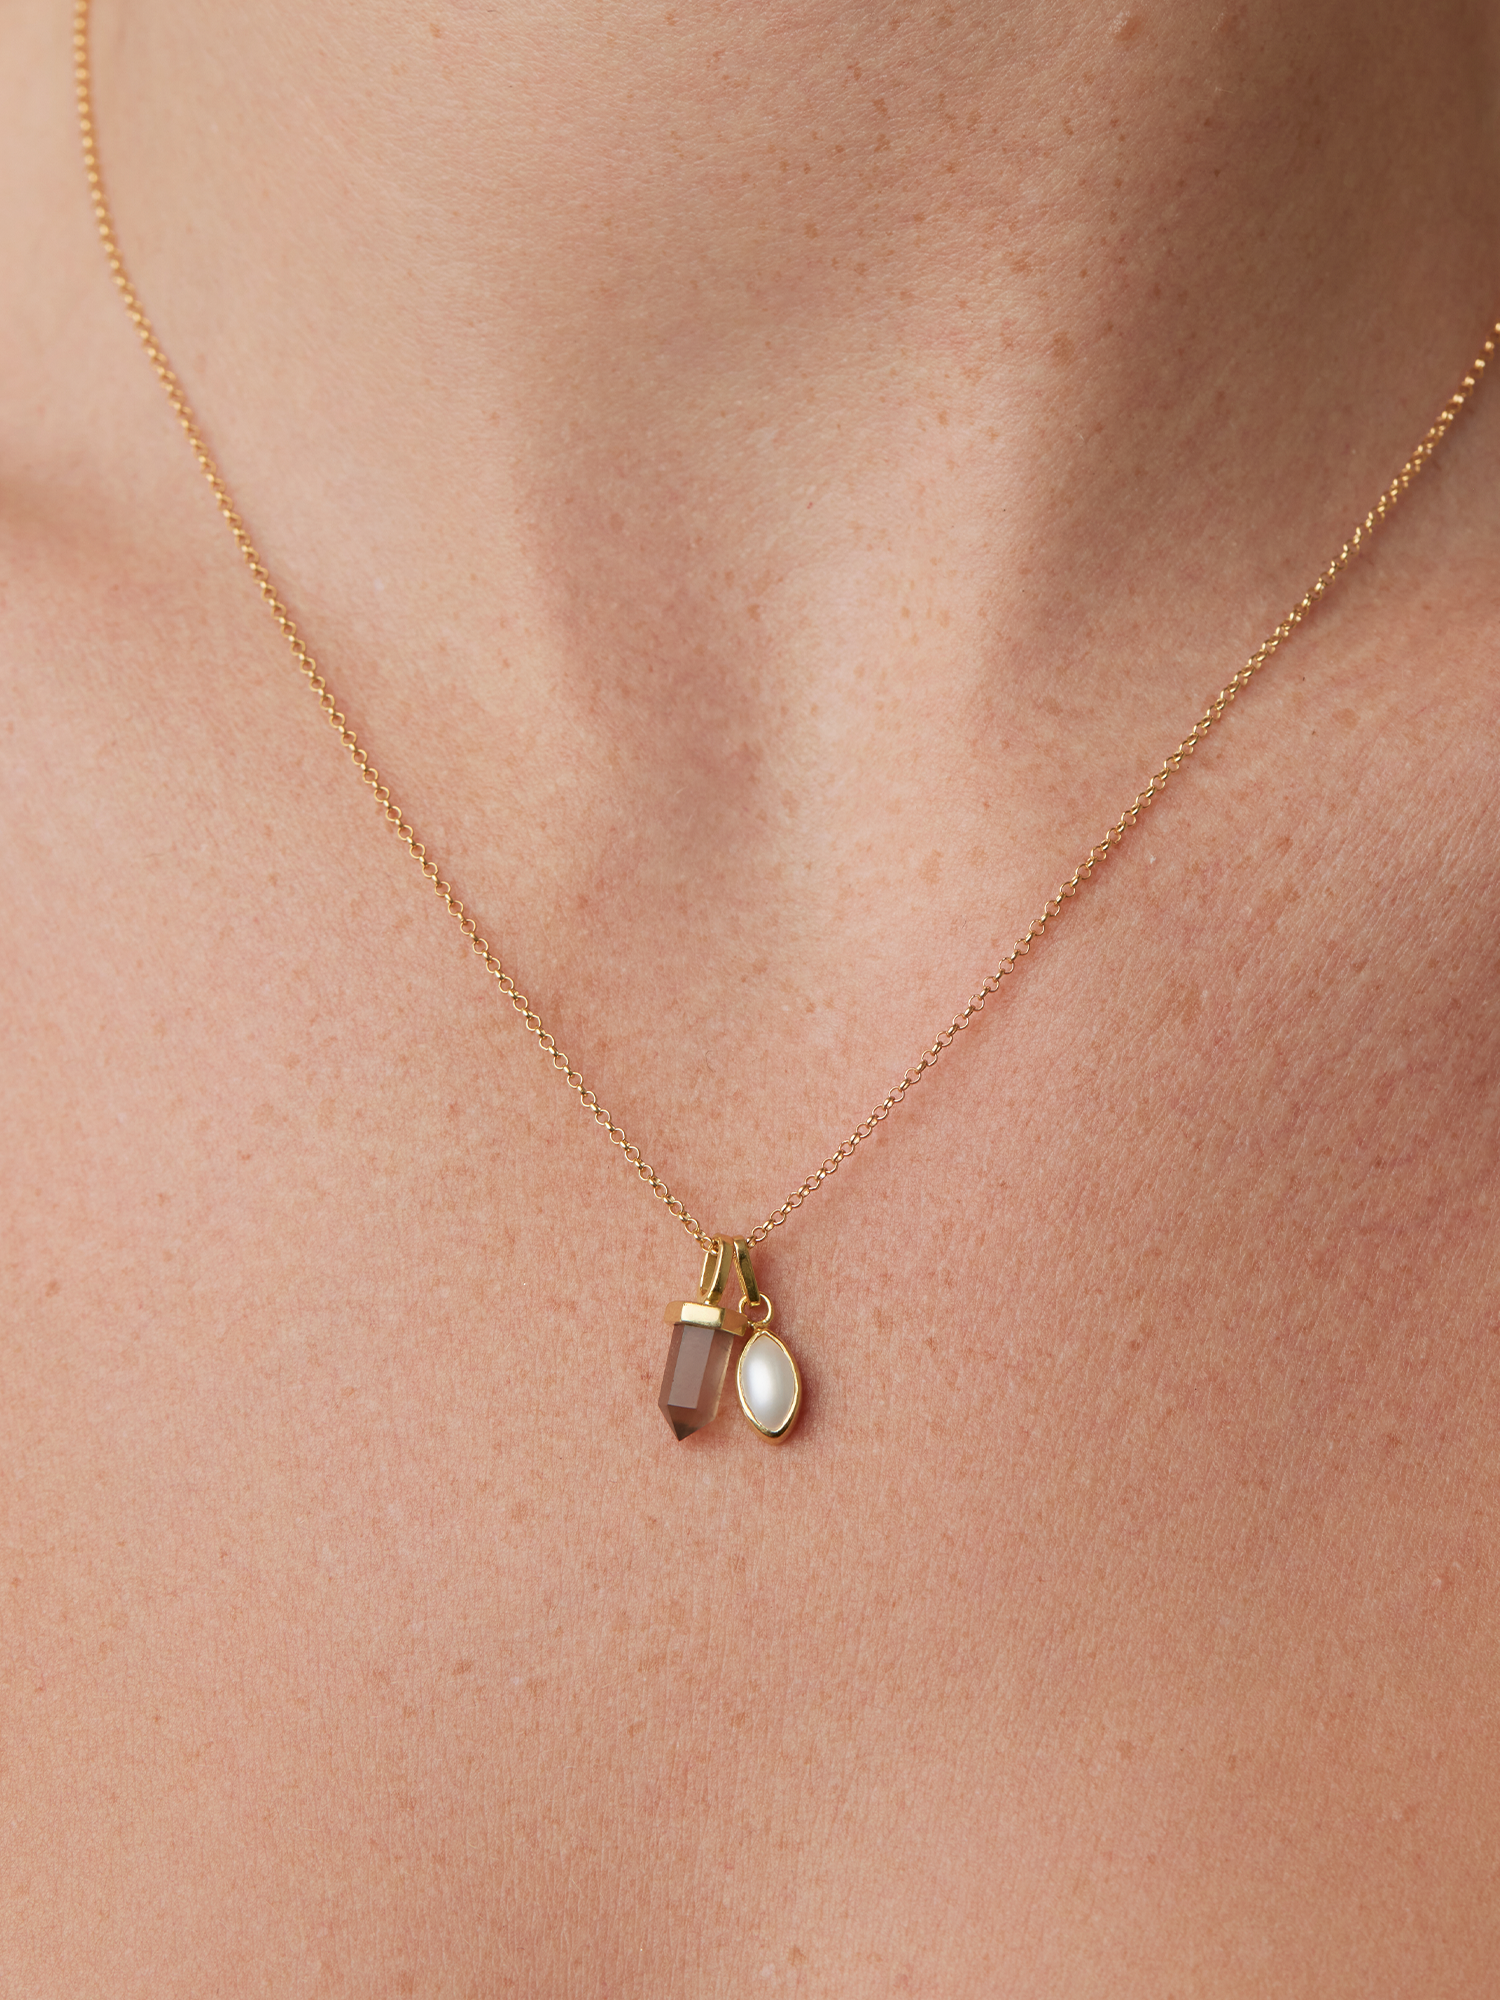 terminated crystal necklace charm | smoky quartz